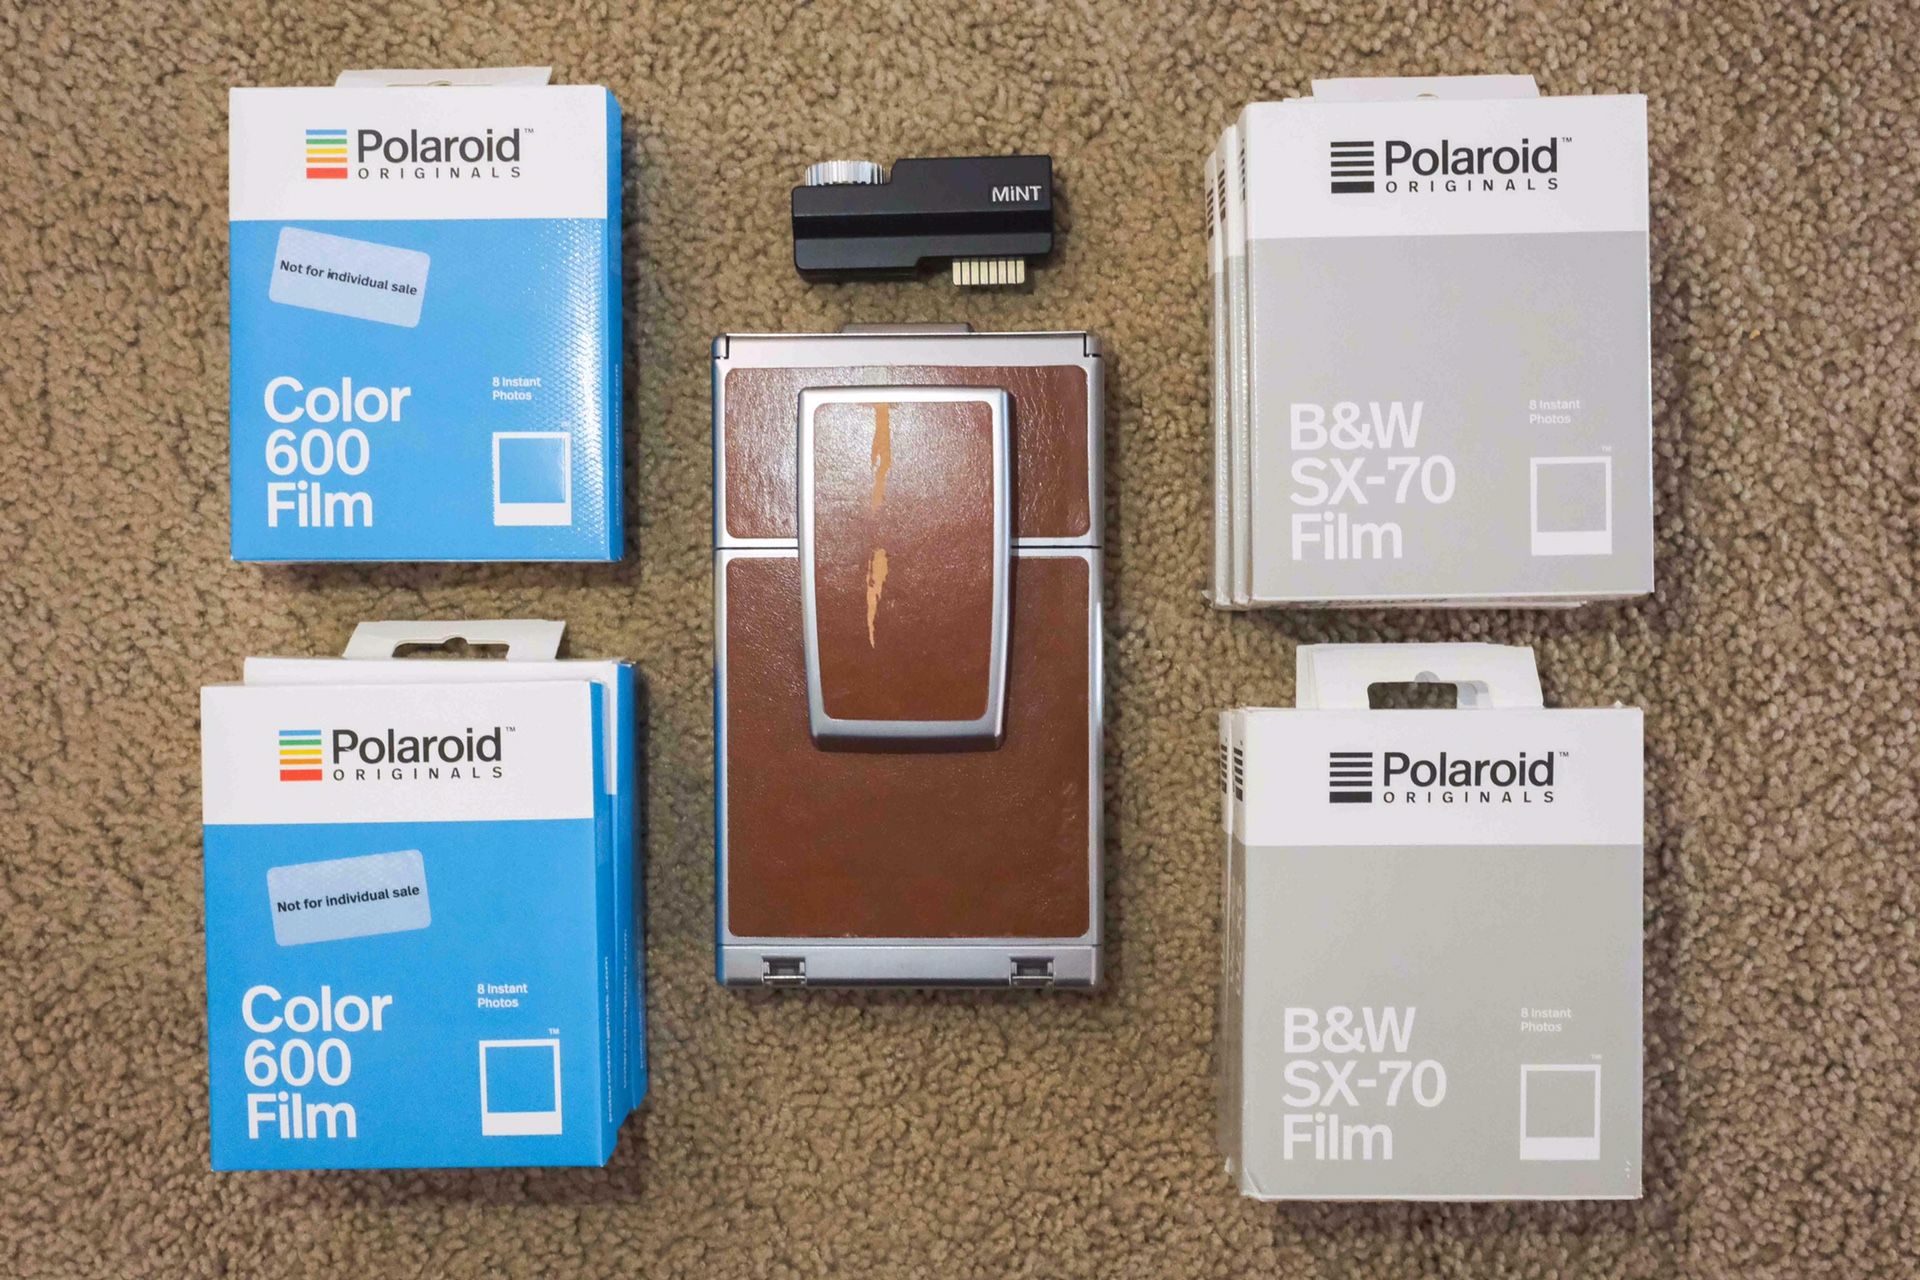 MiNT SLR670-S Polaroid camera with film packs